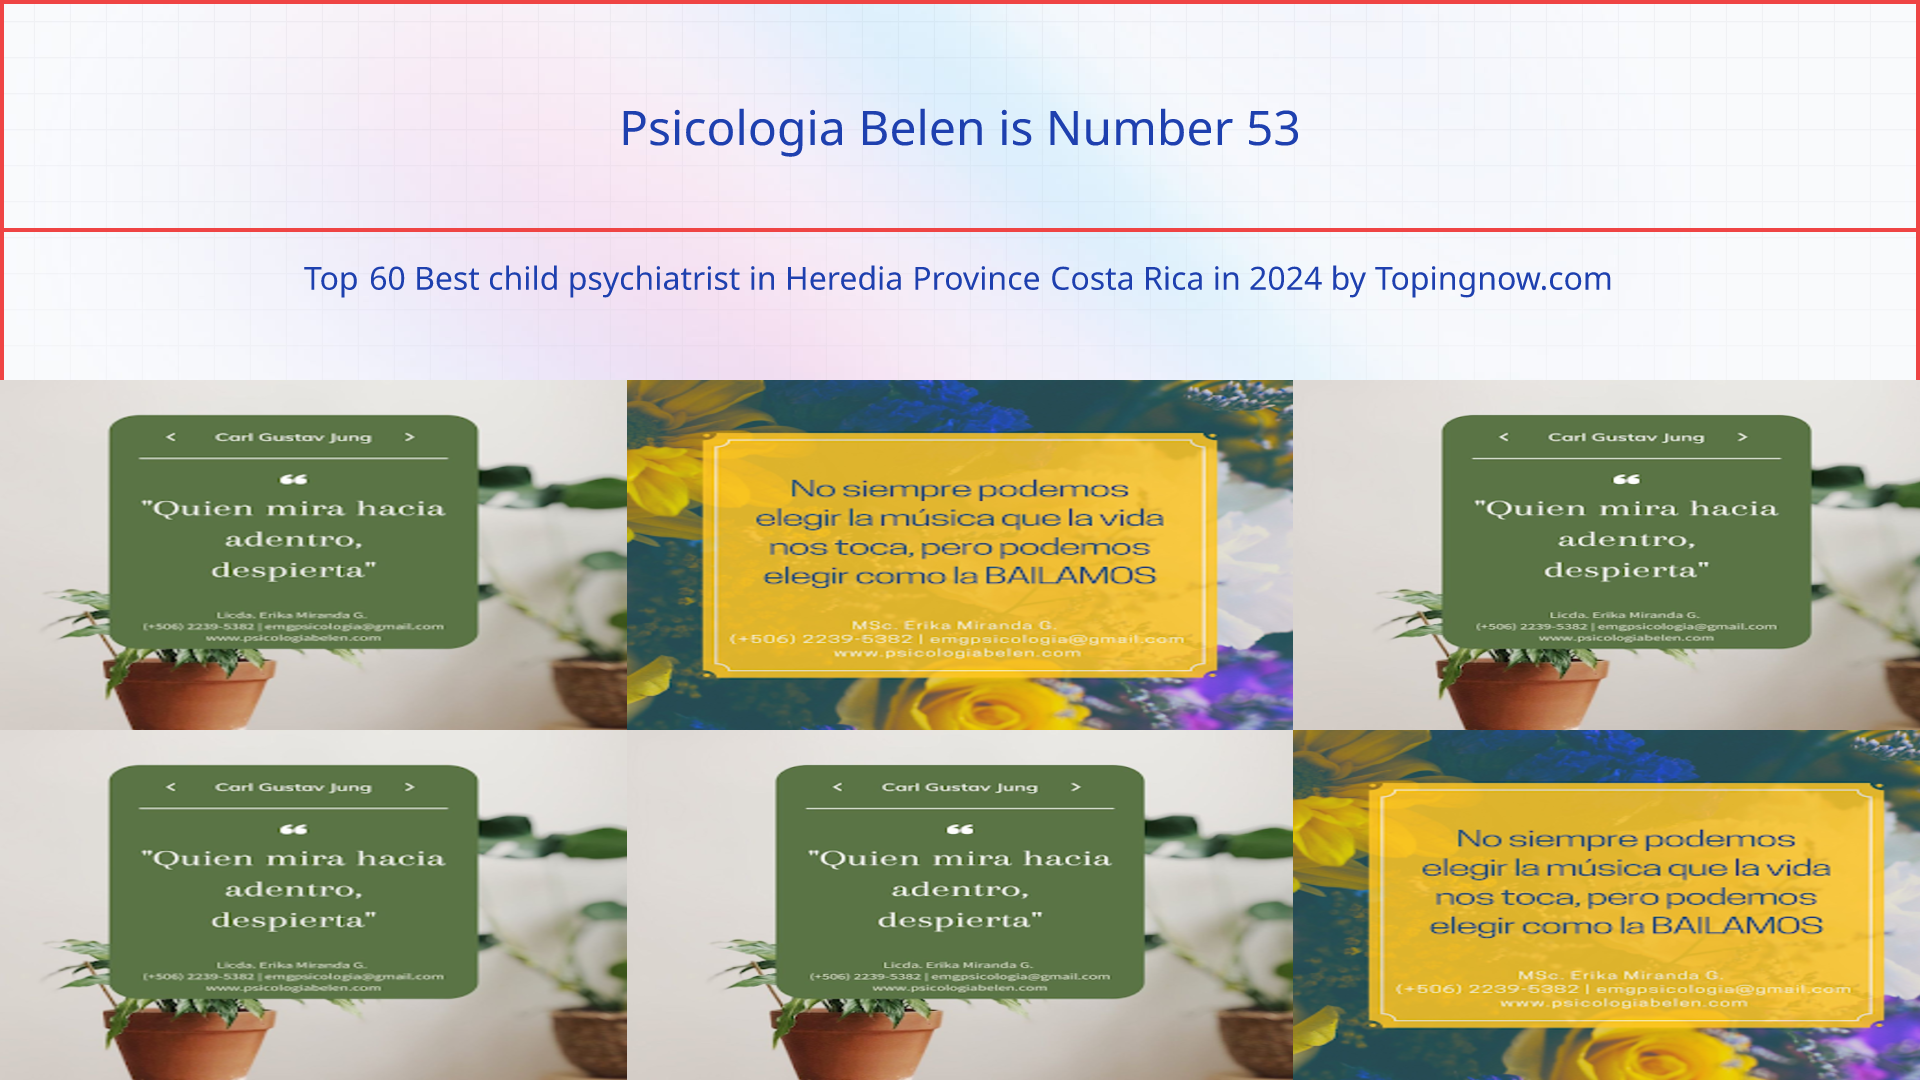 Psicologia Belen: Top 60 Best child psychiatrist in Heredia Province Costa Rica in 2024